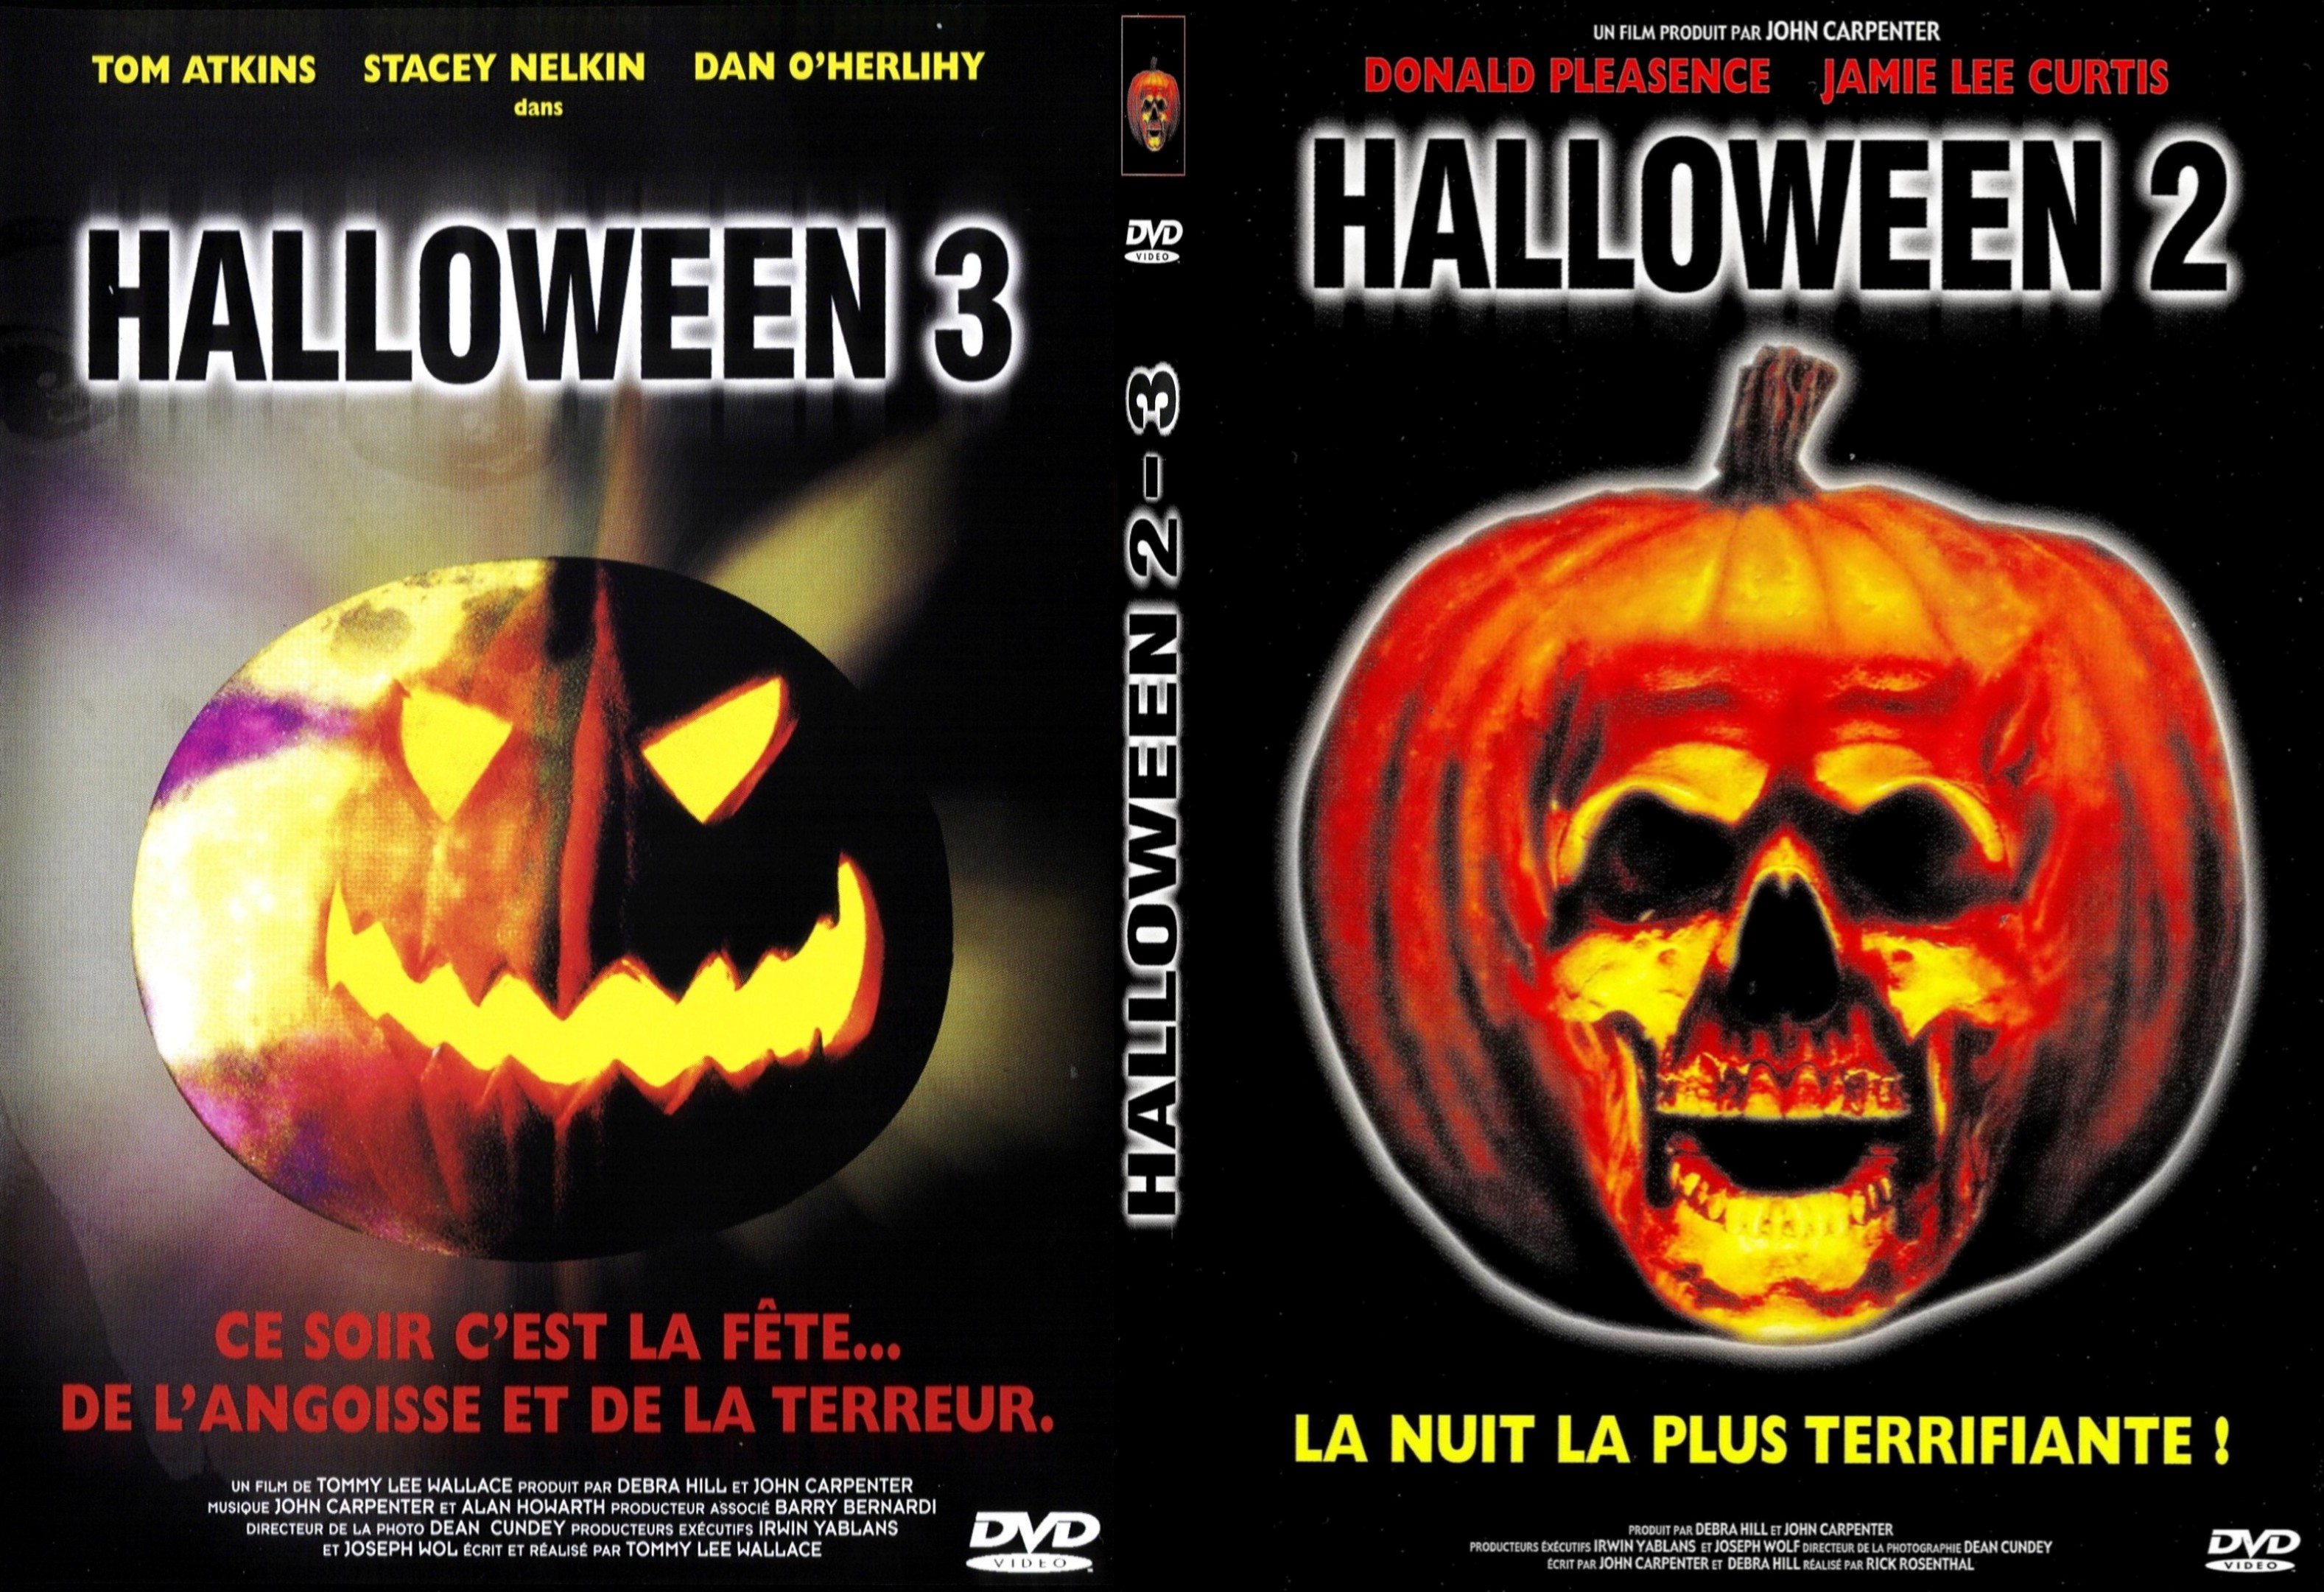 Jaquette DVD Halloween 1 + 2 custom - SLIM